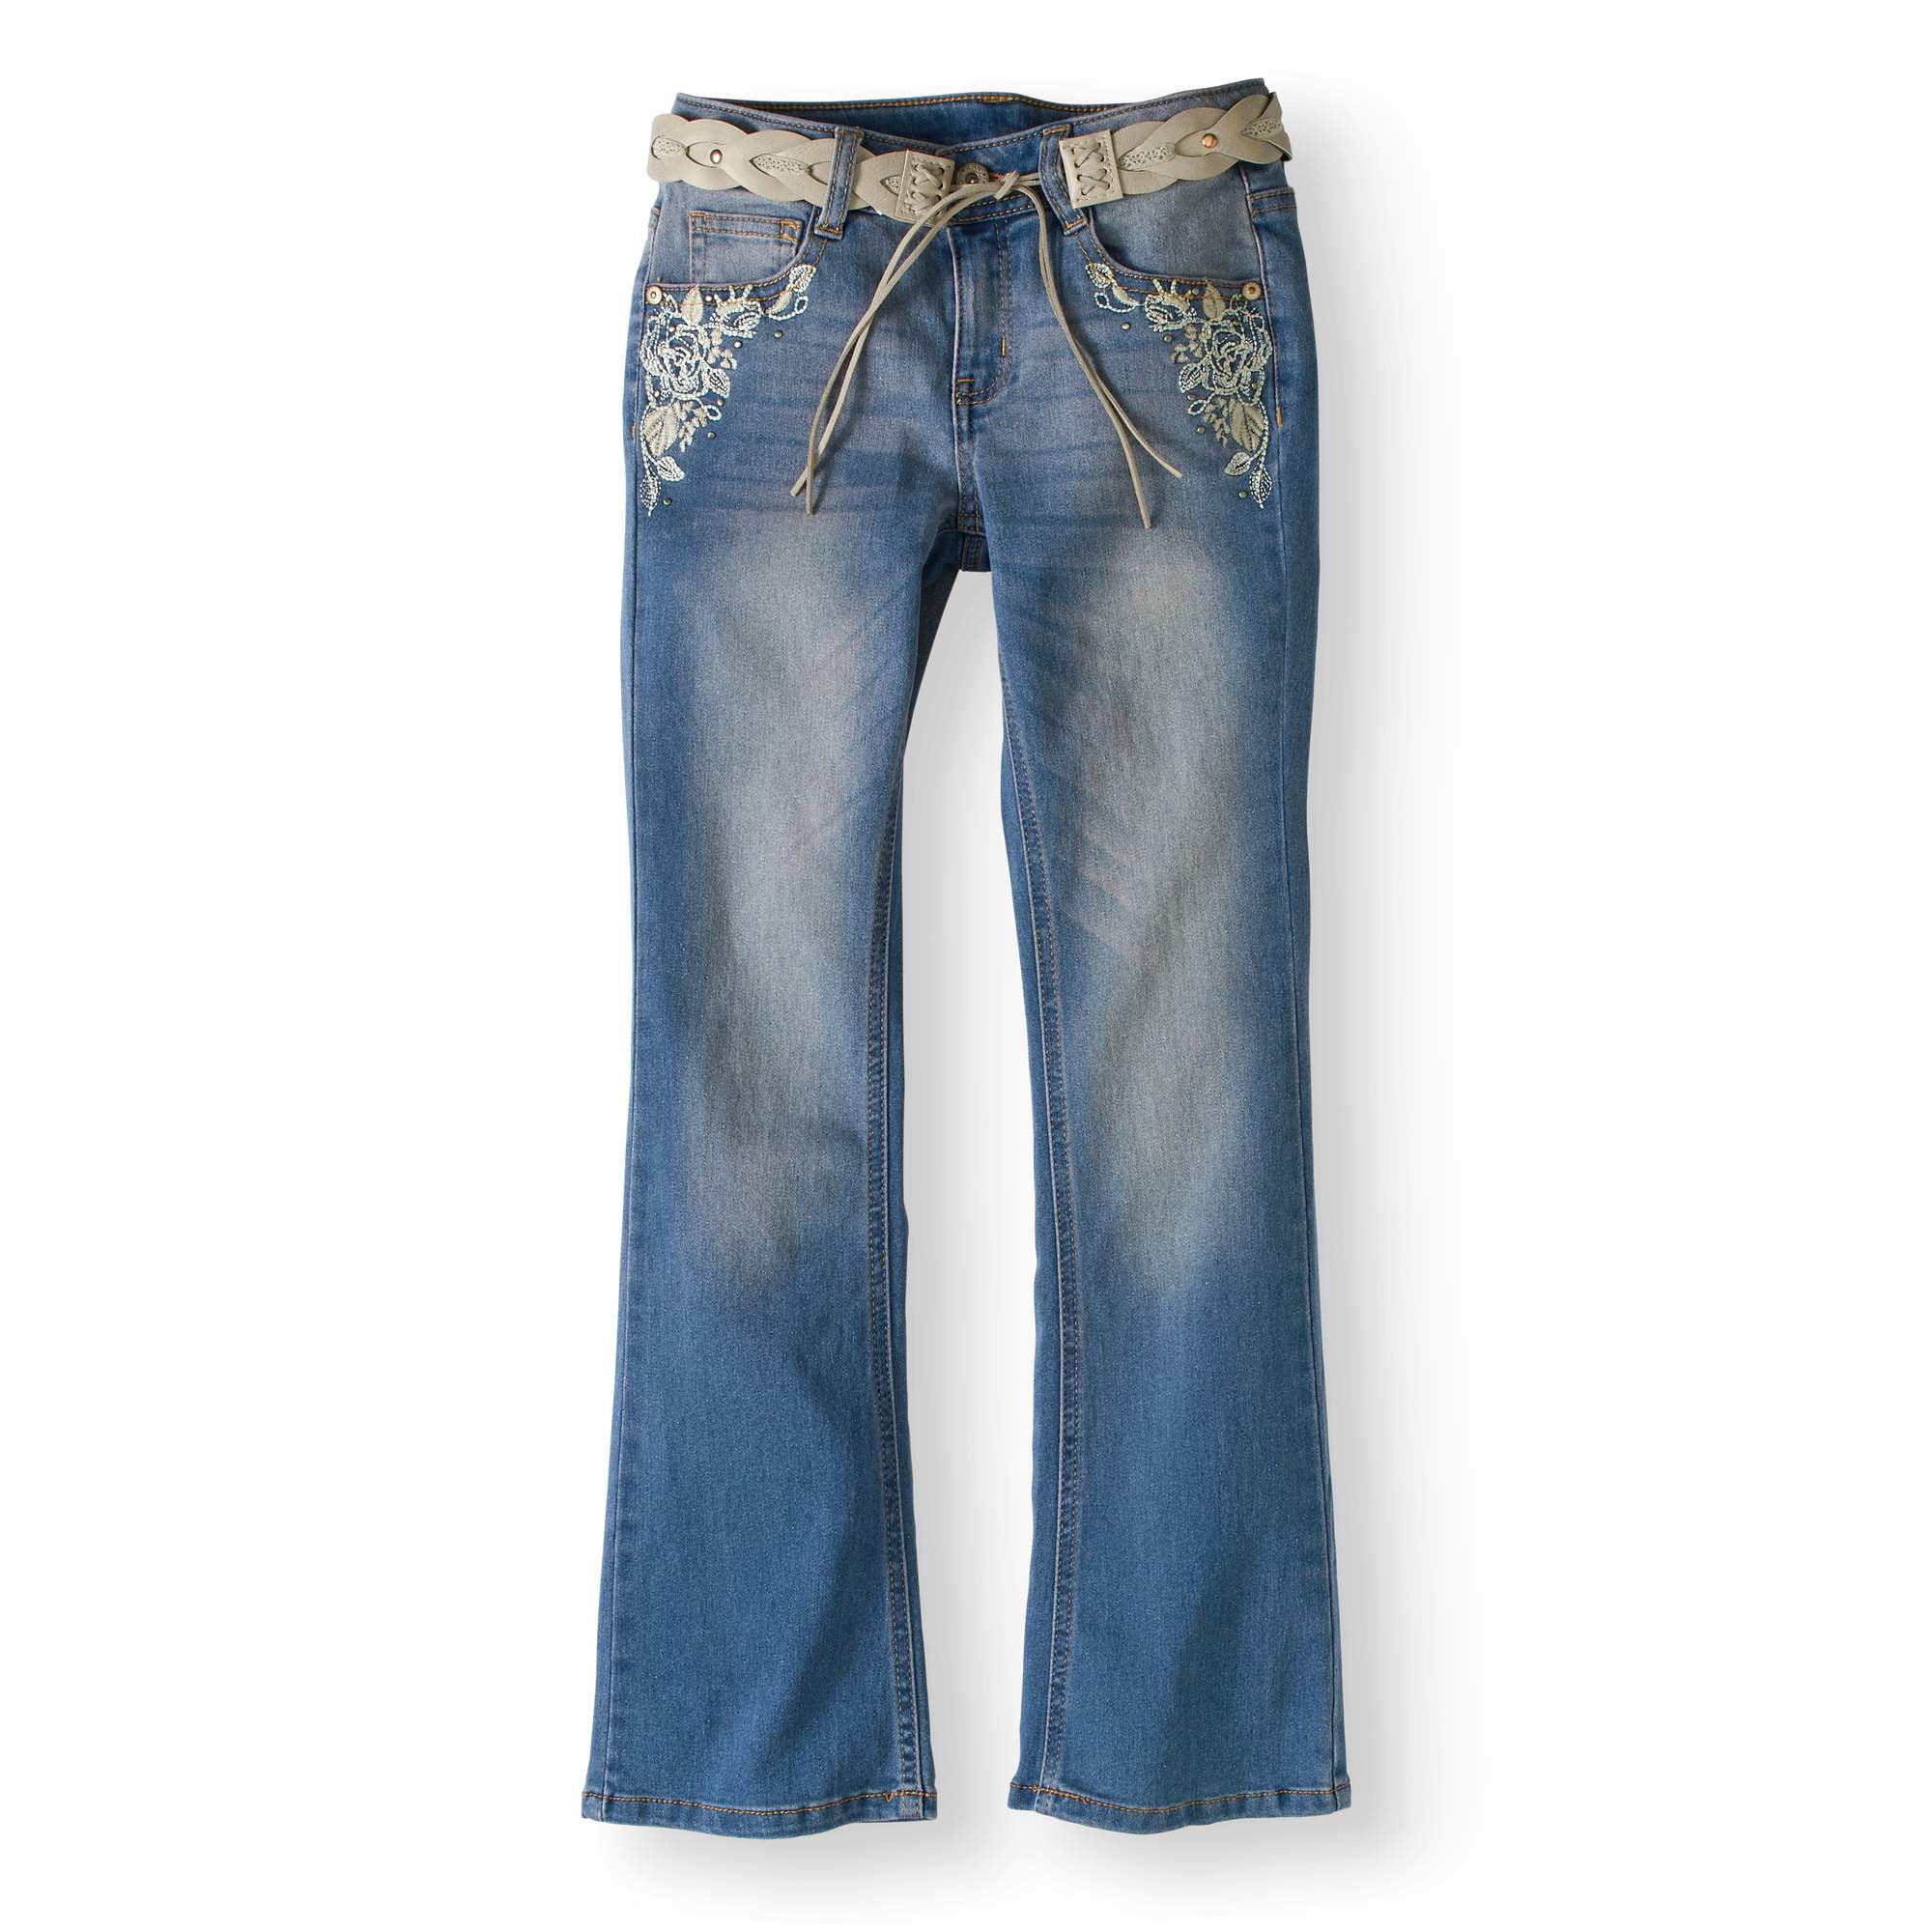 walmart jeans price